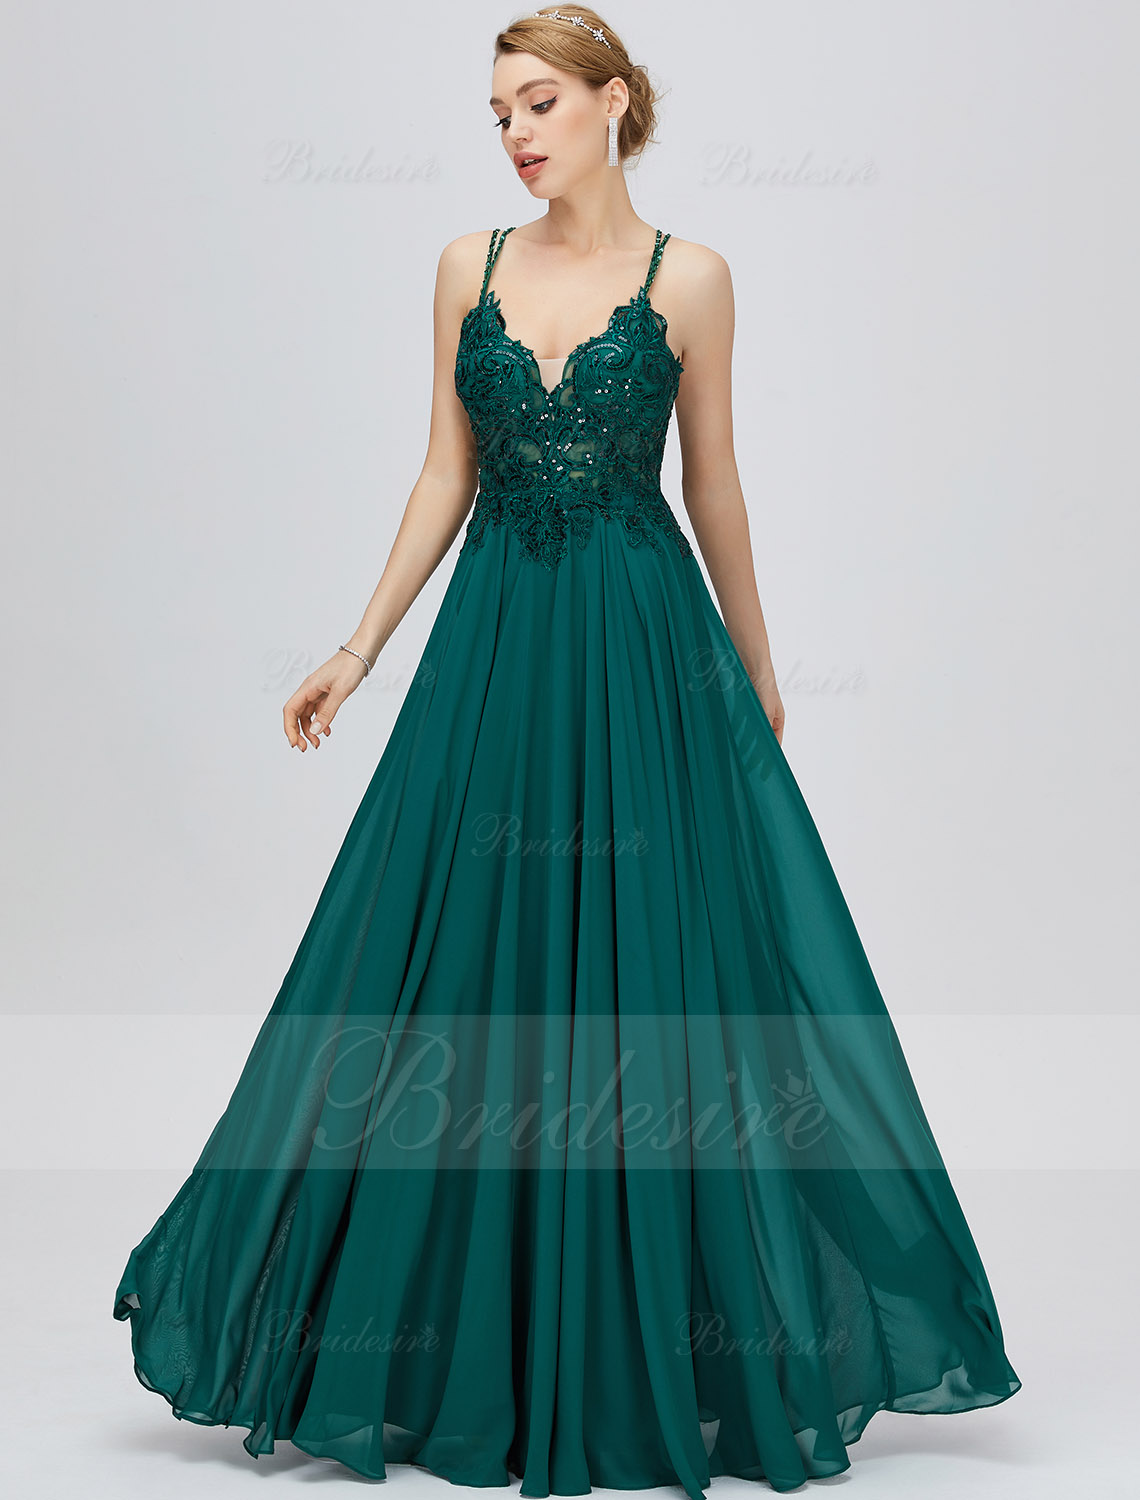 A-line V-neck Floor-length Sleeveless Chiffon Prom Dress